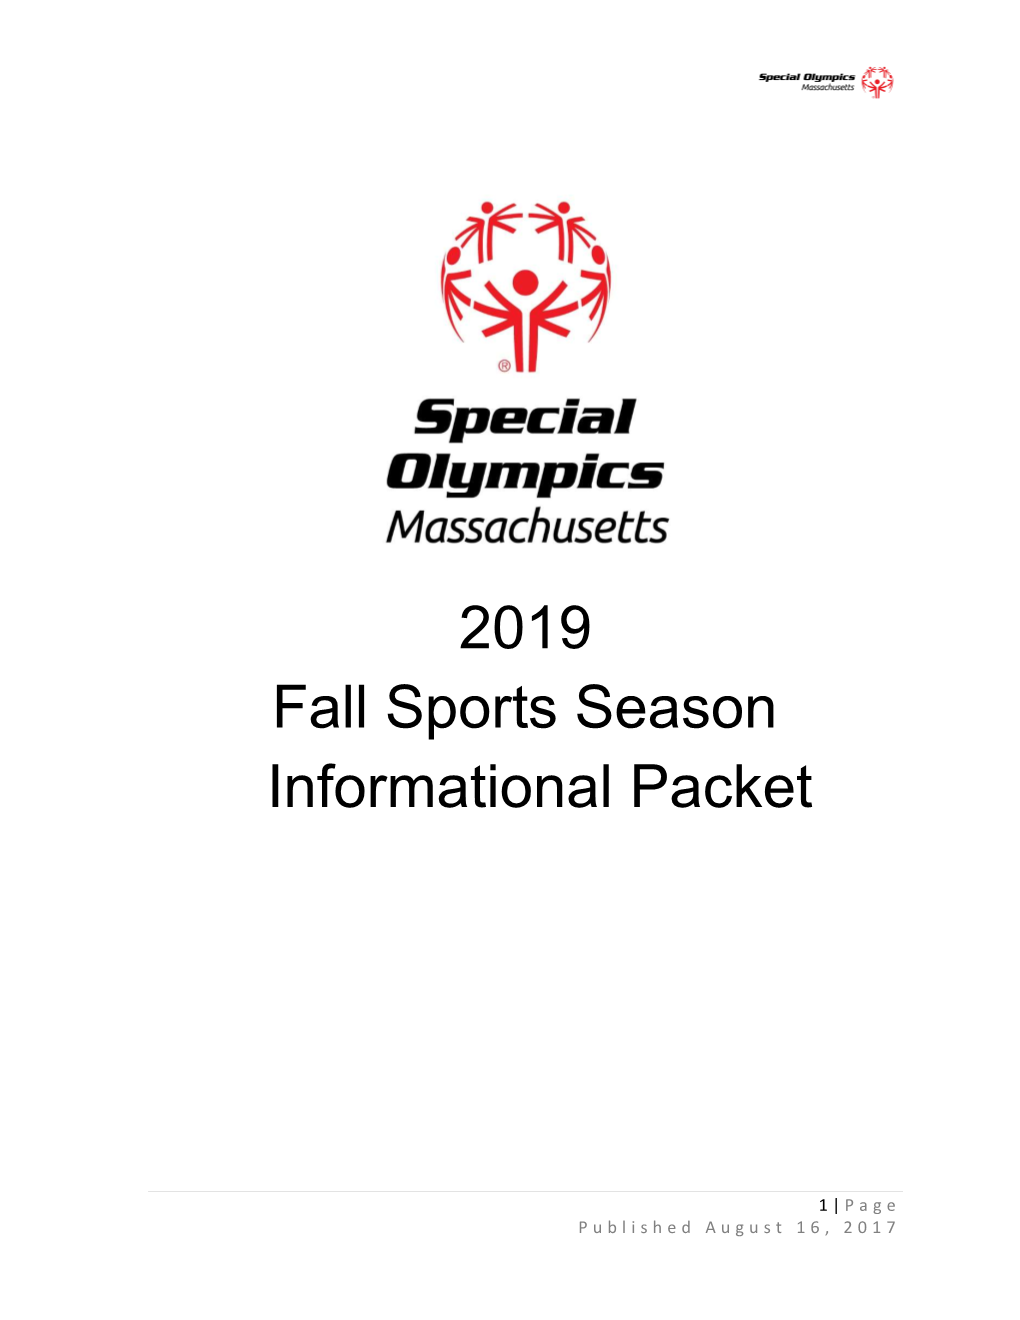 2019 Fall Sports Season Informational Packet